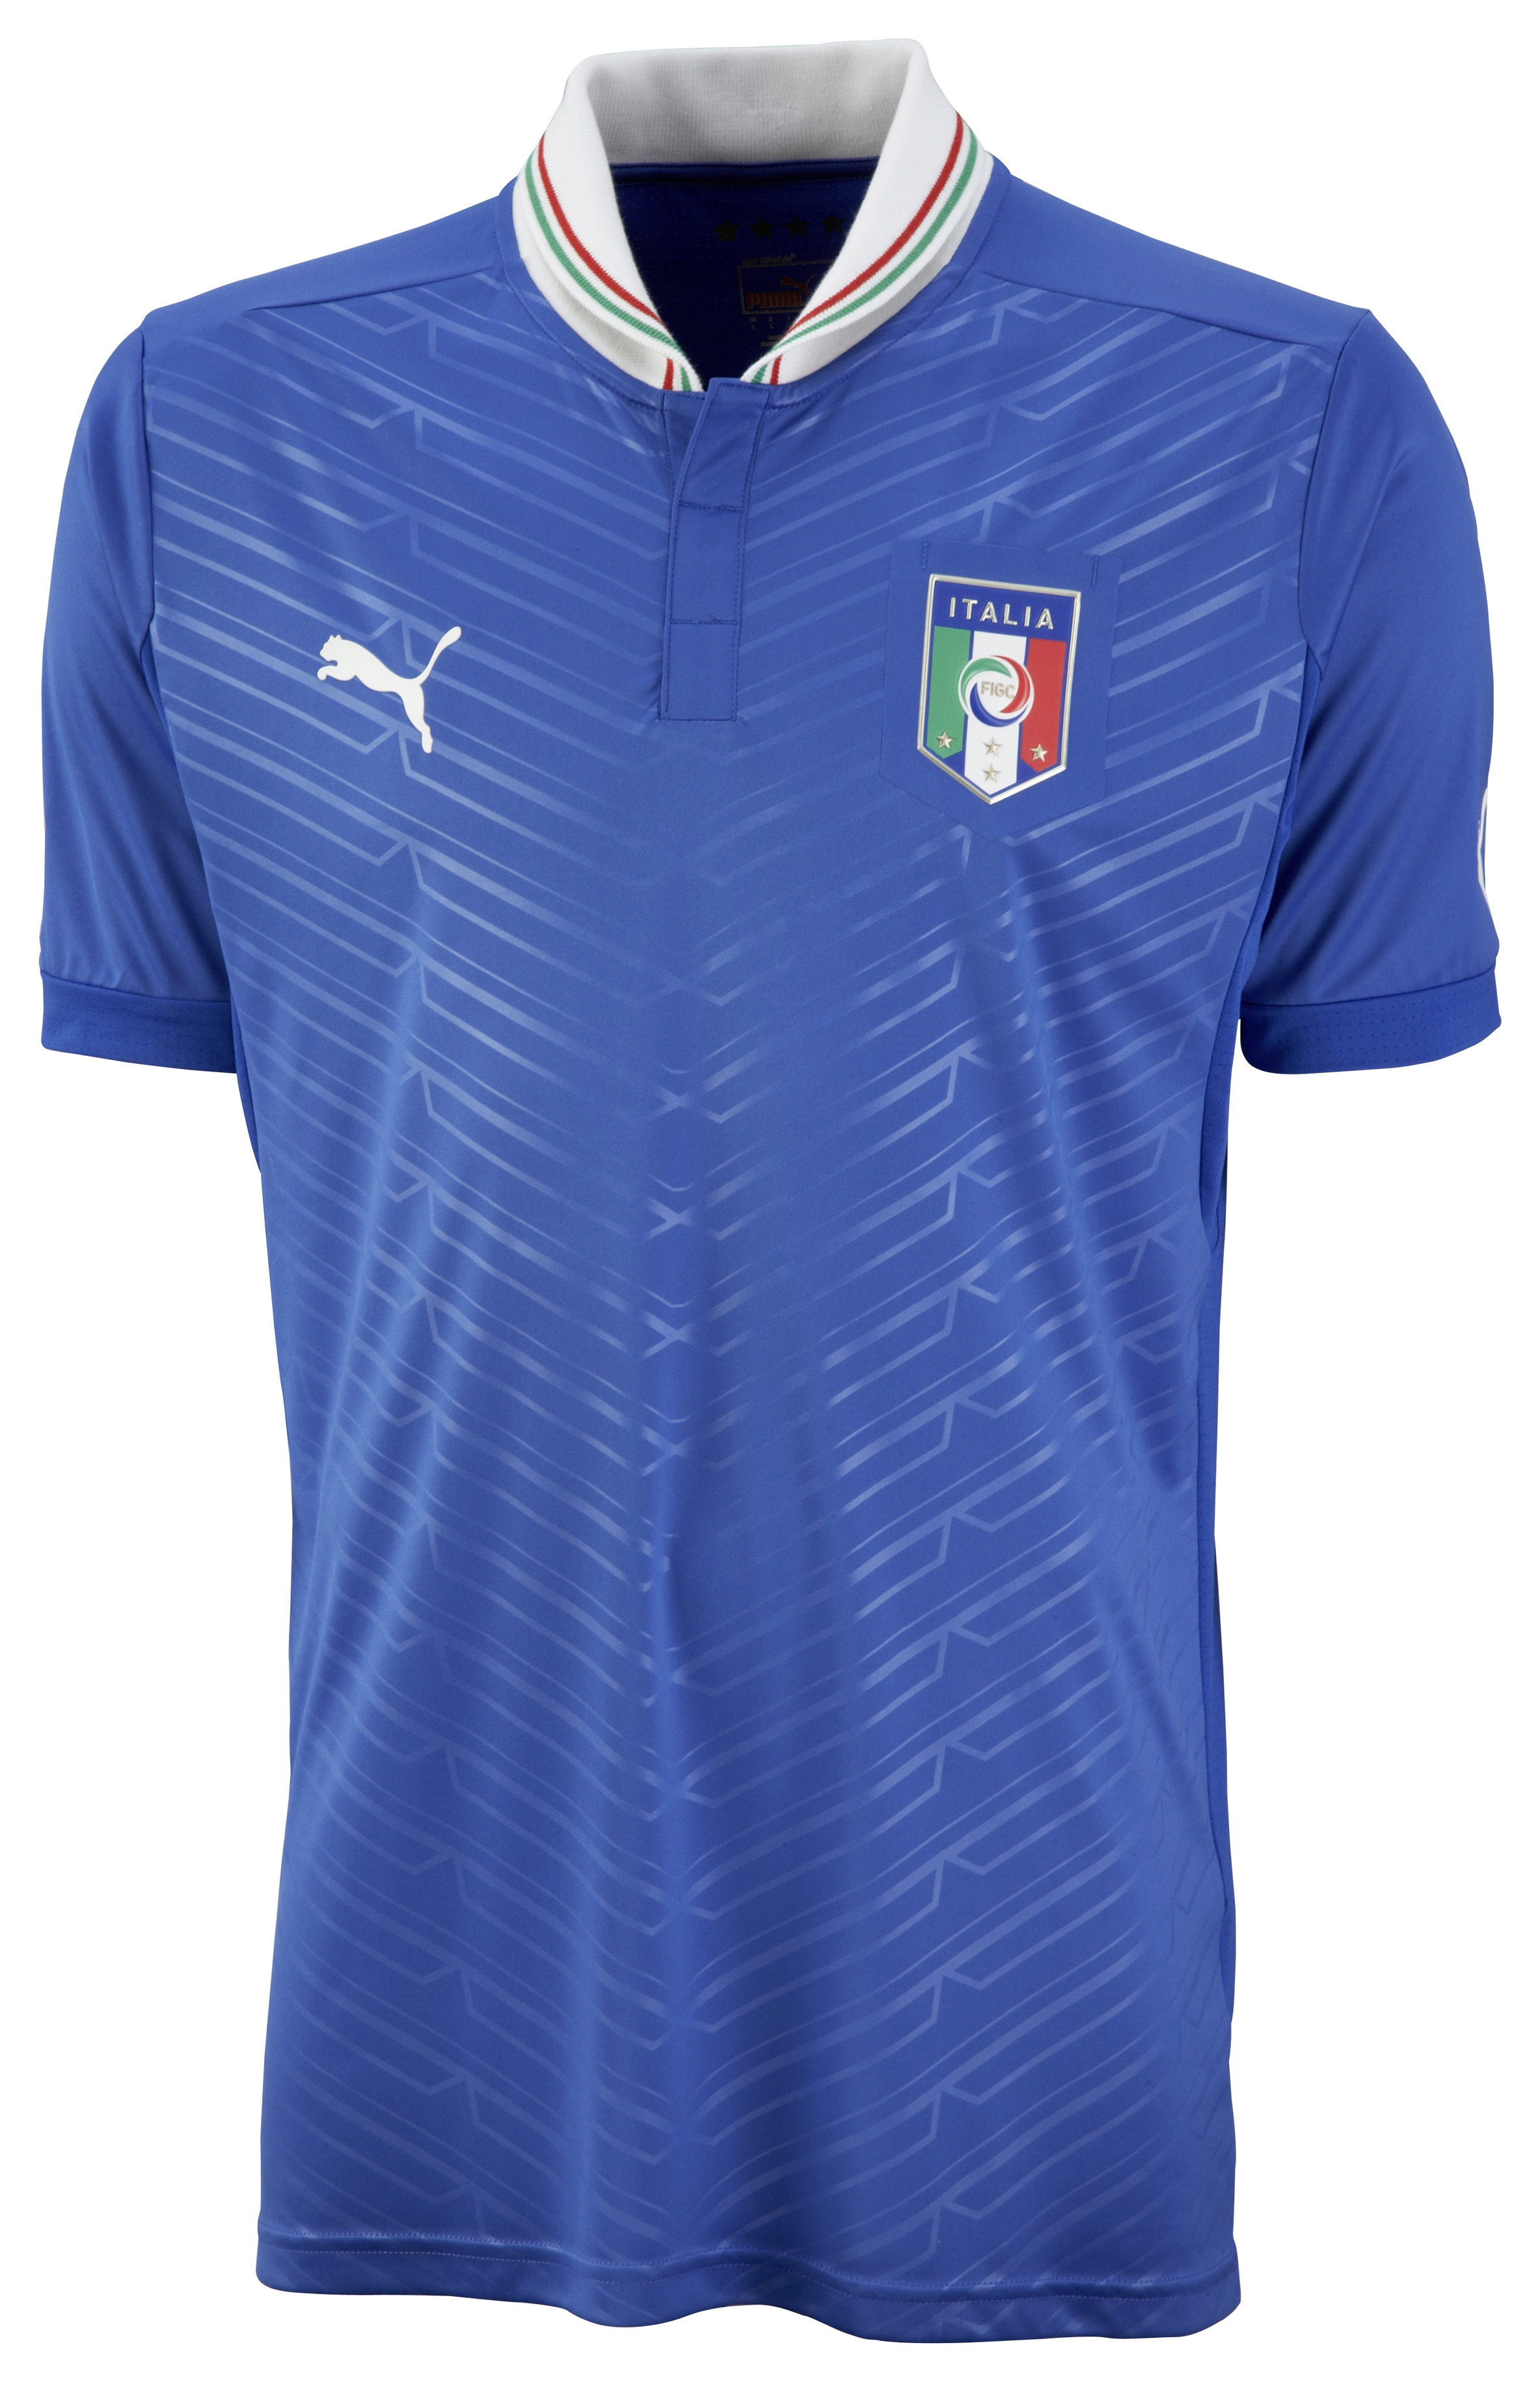 Vertrauenswürdige Qualität Football kit release: launch new SportLocker for Euro kit home – 2012 Italy PUMA